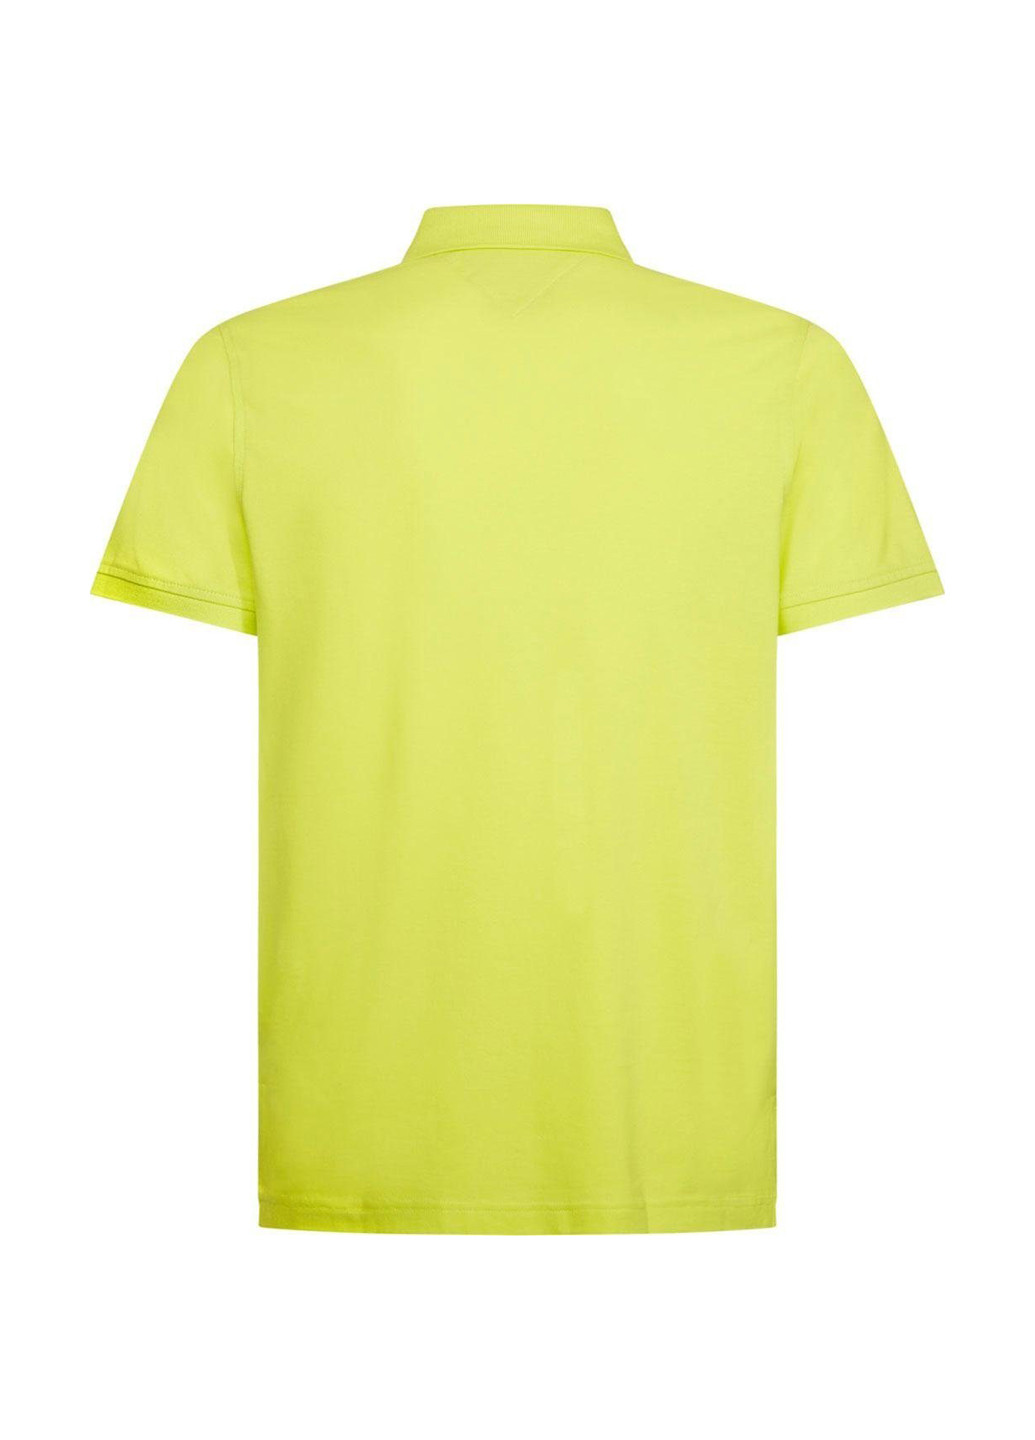 Желтая футболка-поло для мужчин Tommy Hilfiger с логотипом